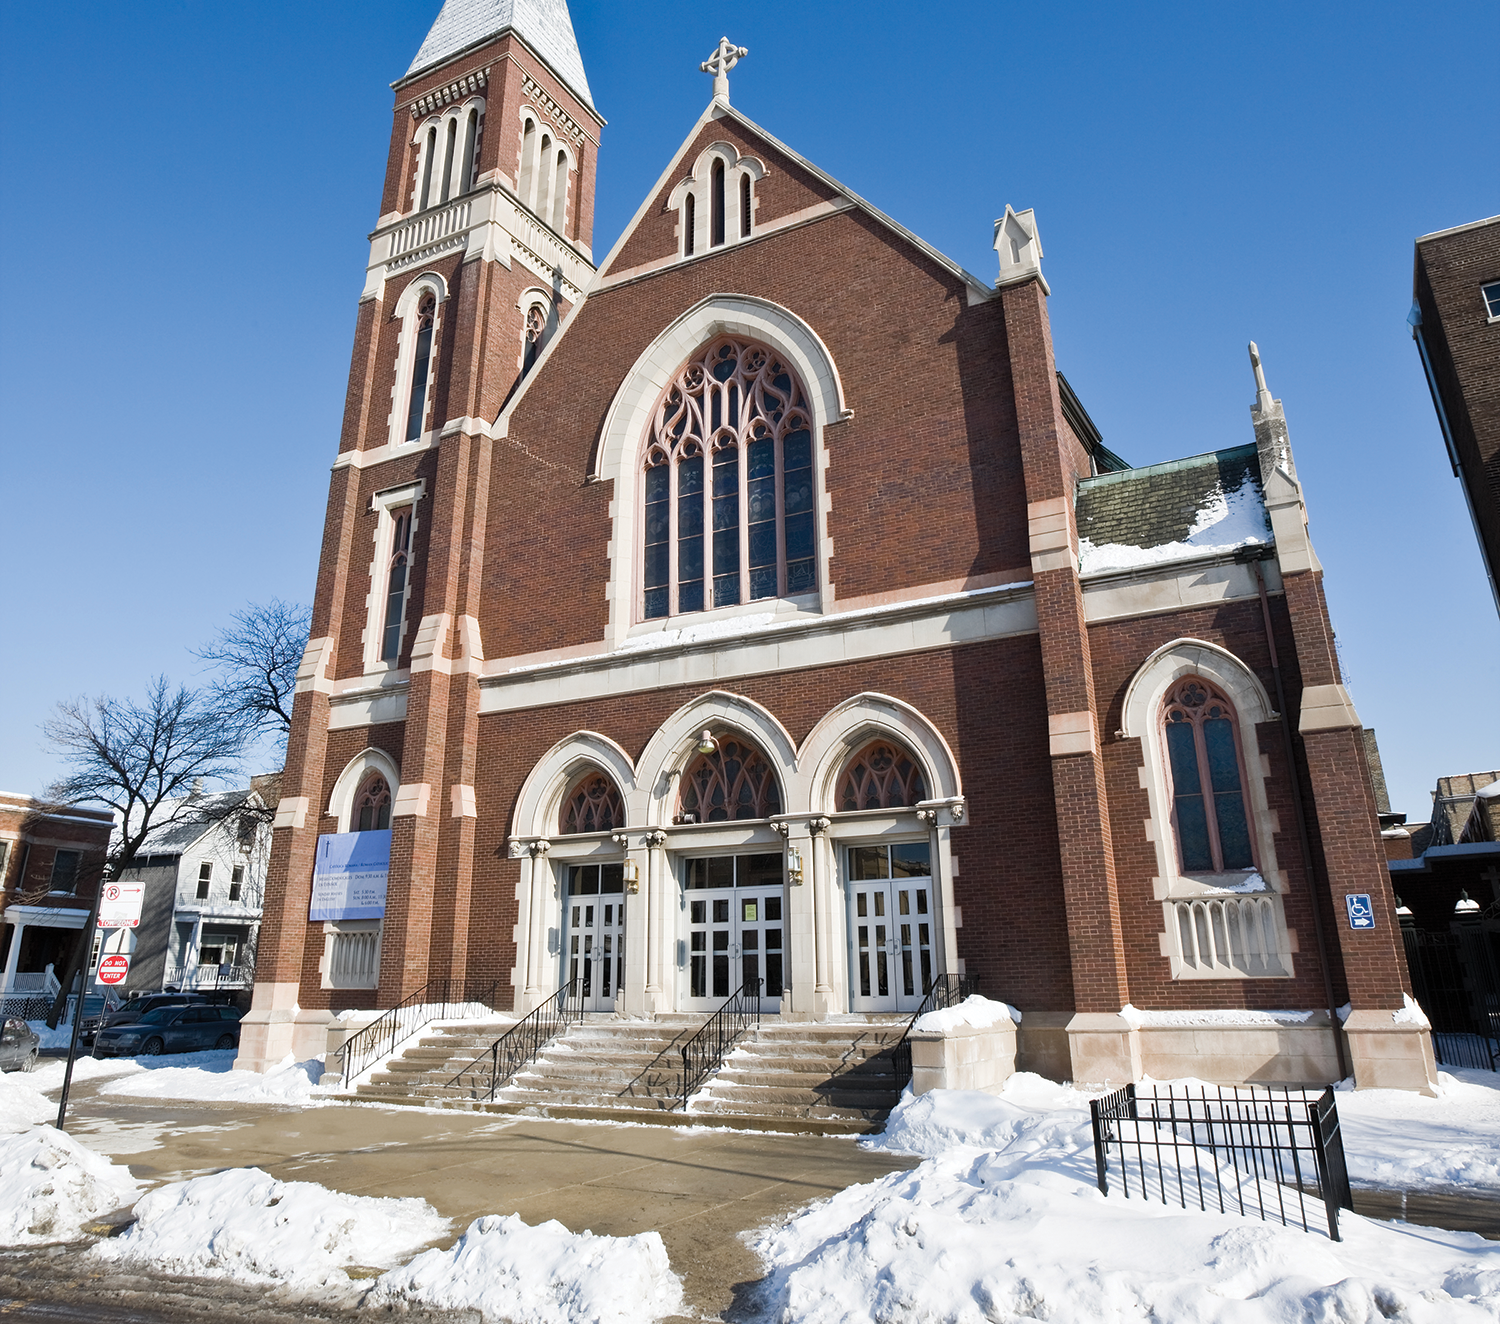 Old church using snow melt systems in sidewalks